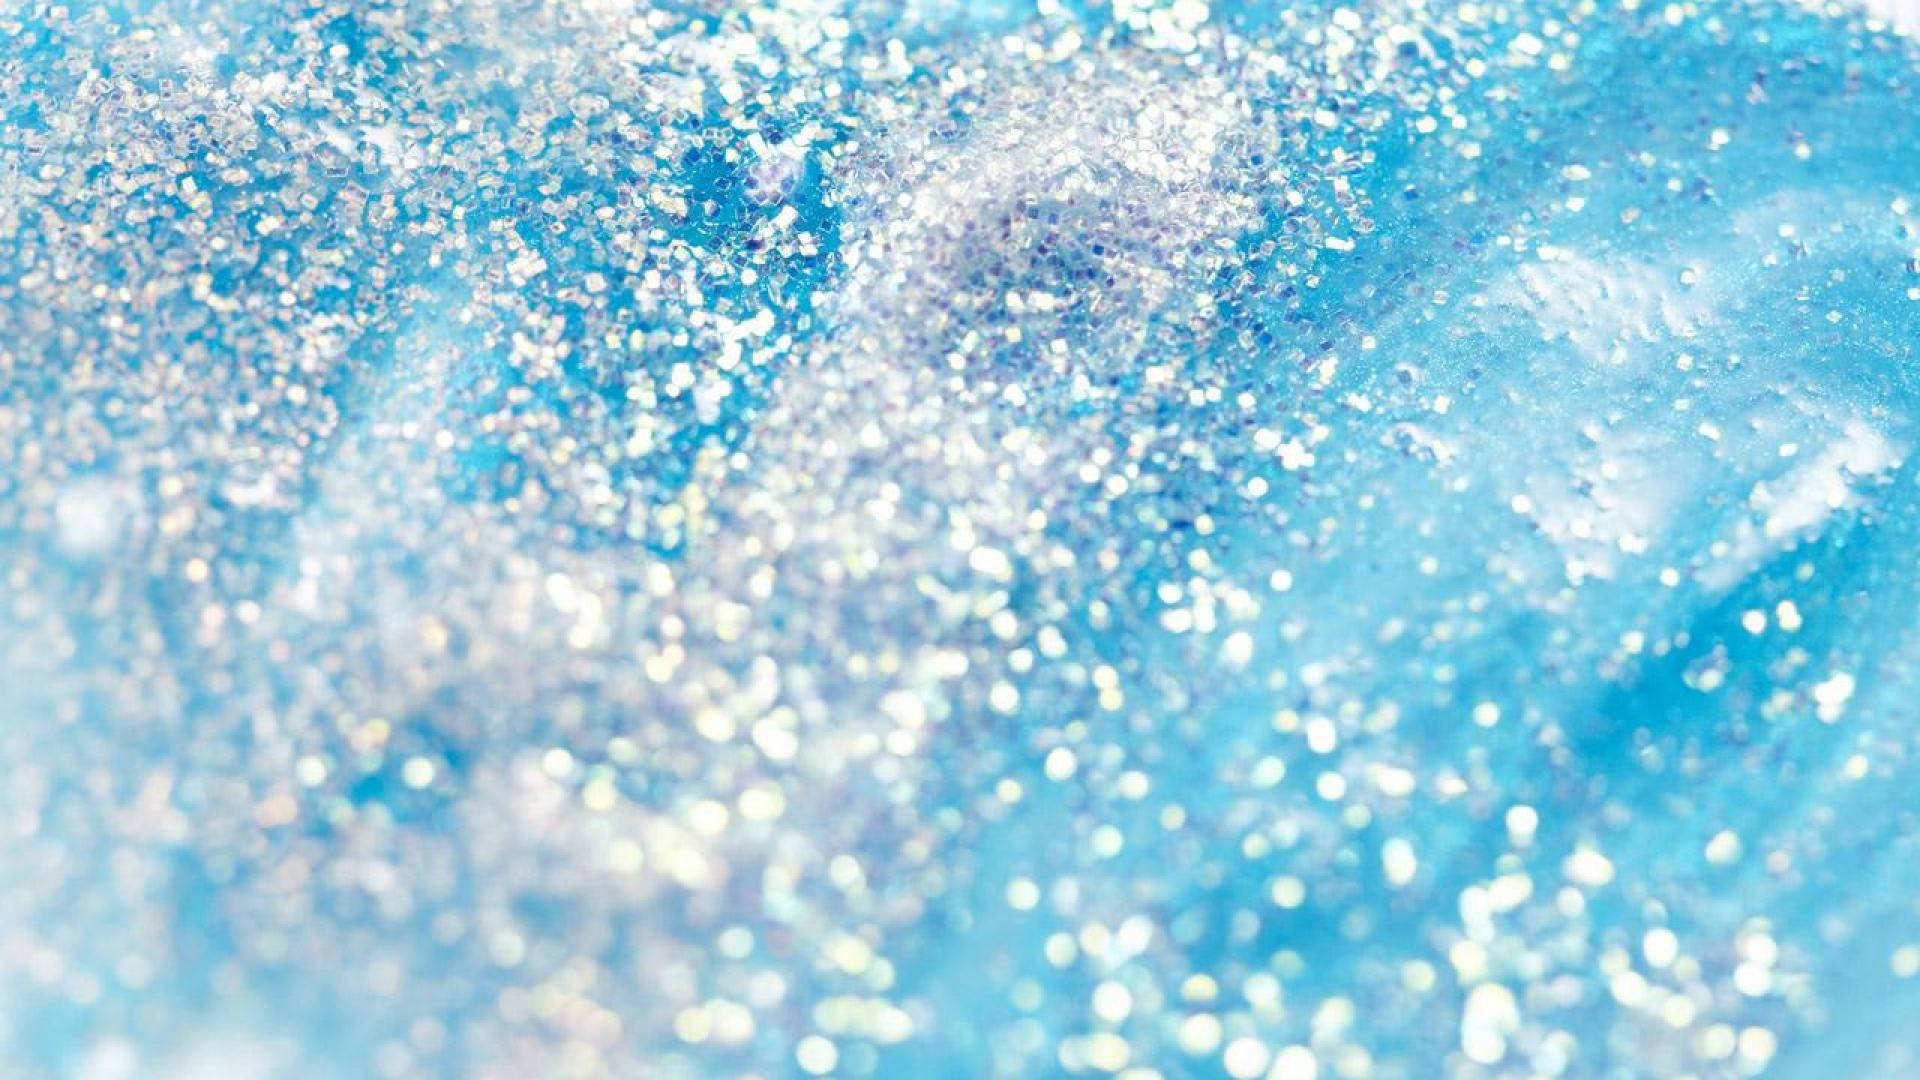 A Close Up Of A Blue And Silver Liquid Wallpaper